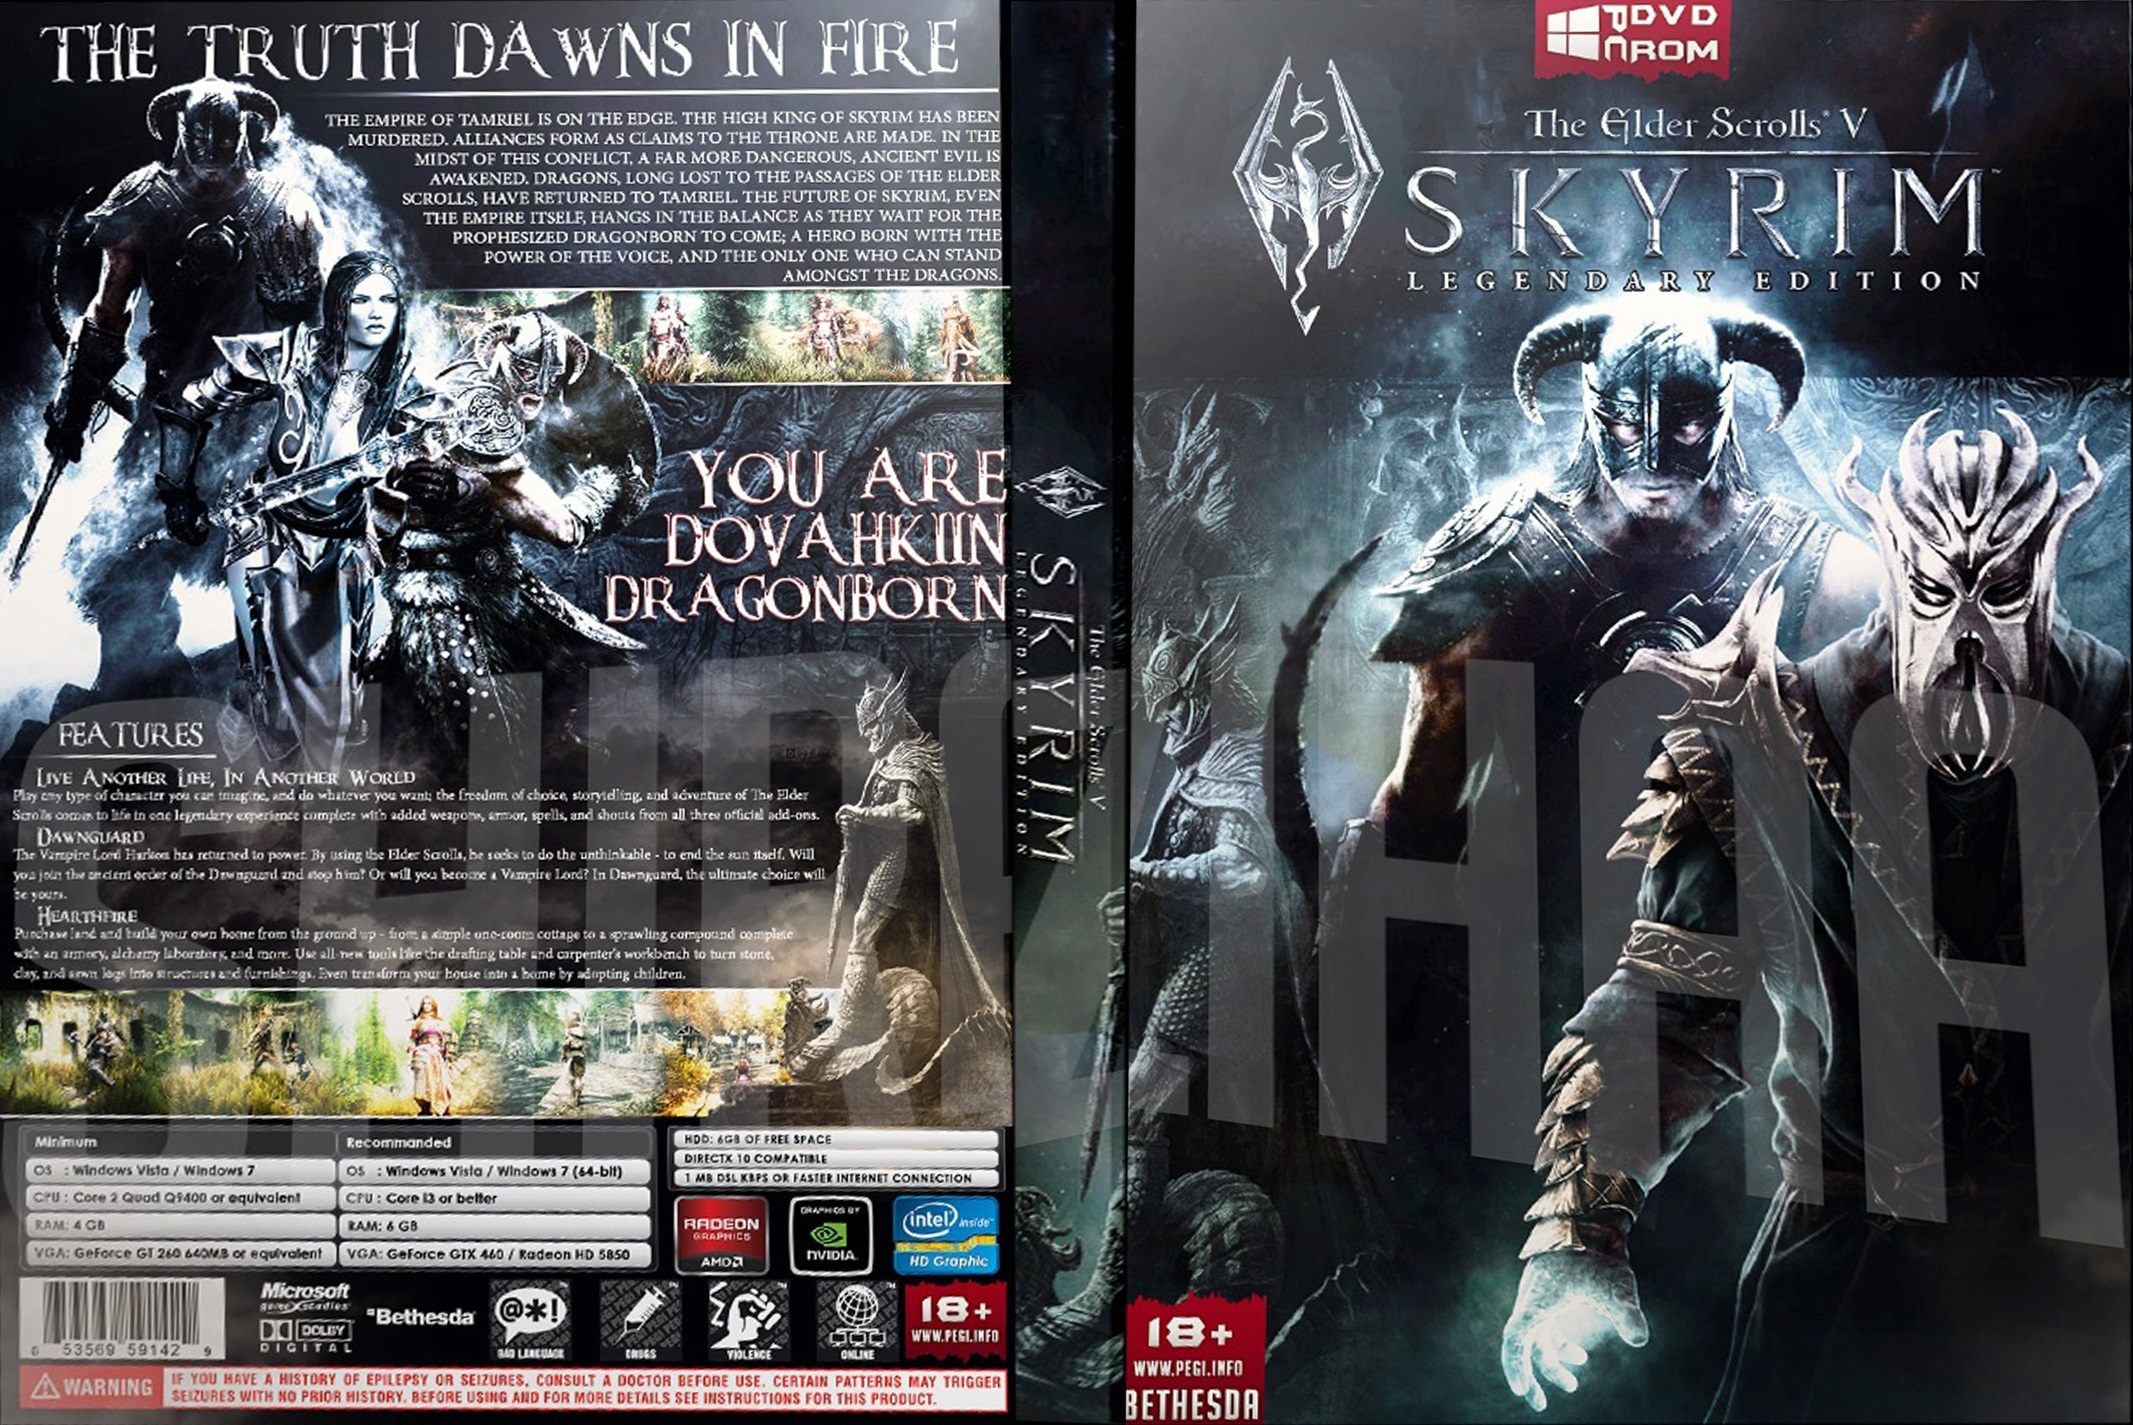 The Elder Scrolls V: Skyrim Legendary Edition box cover